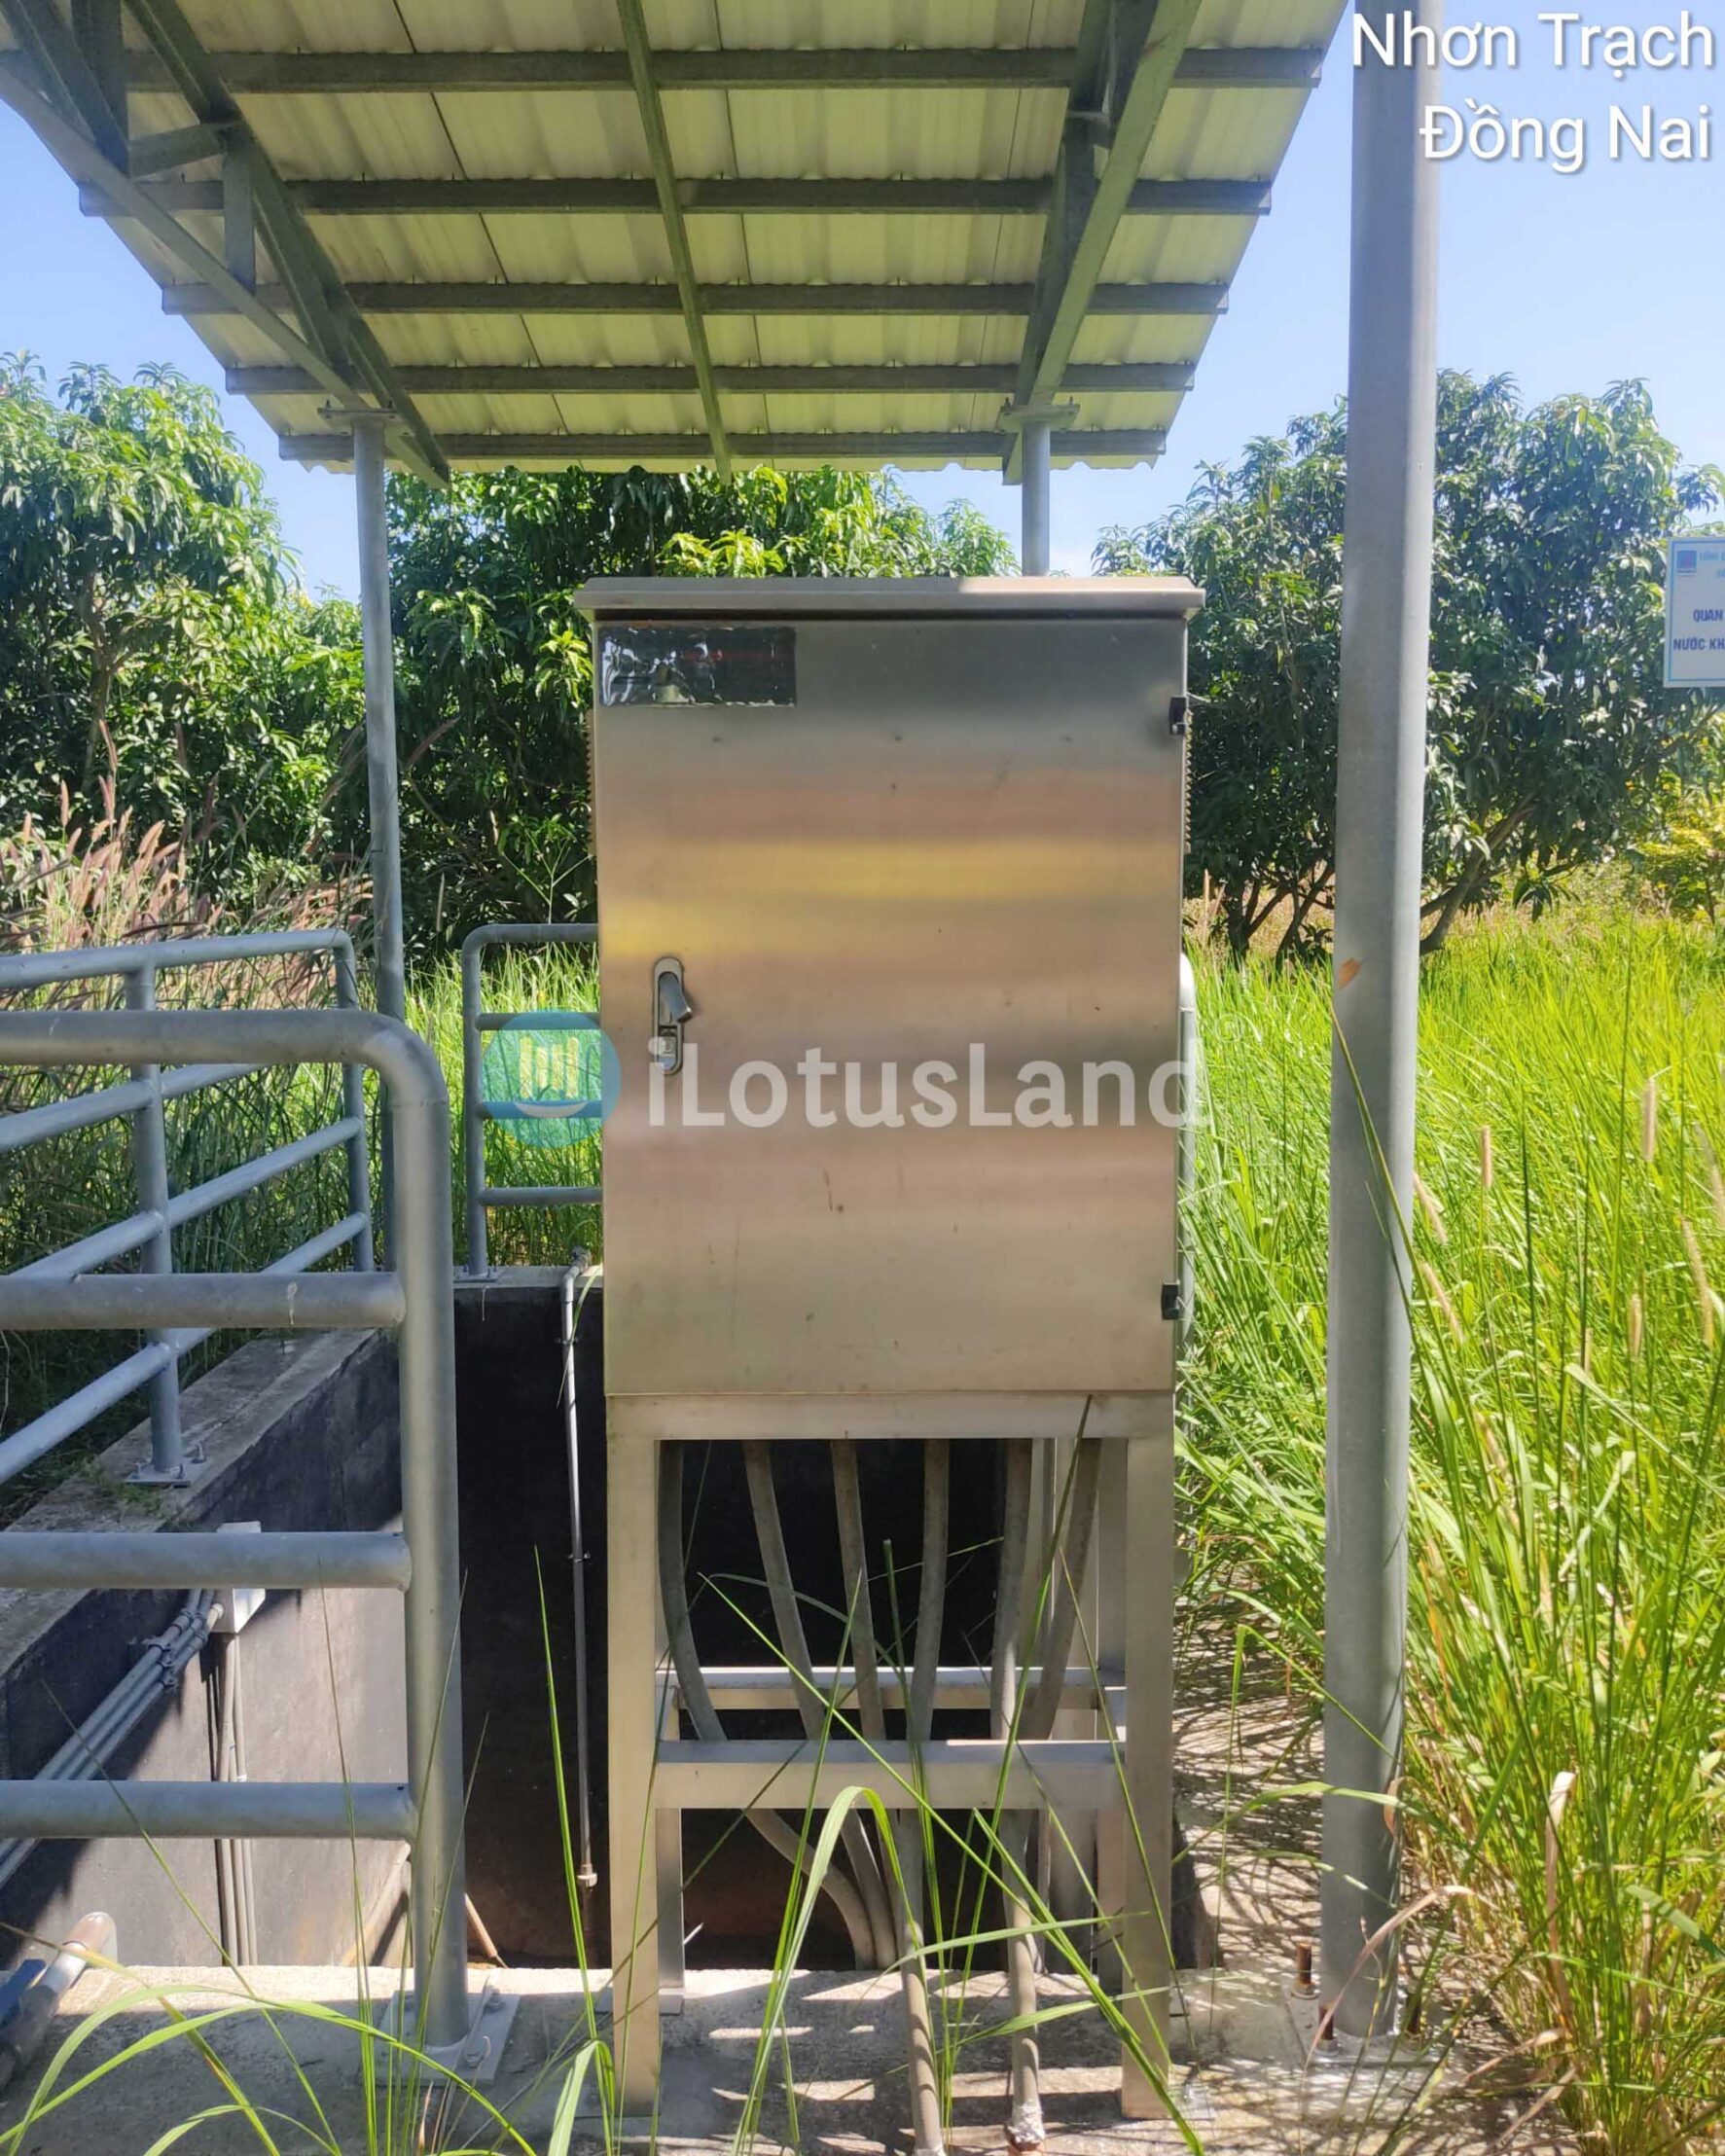 Wastewater monitoring station Nhon Trach 1